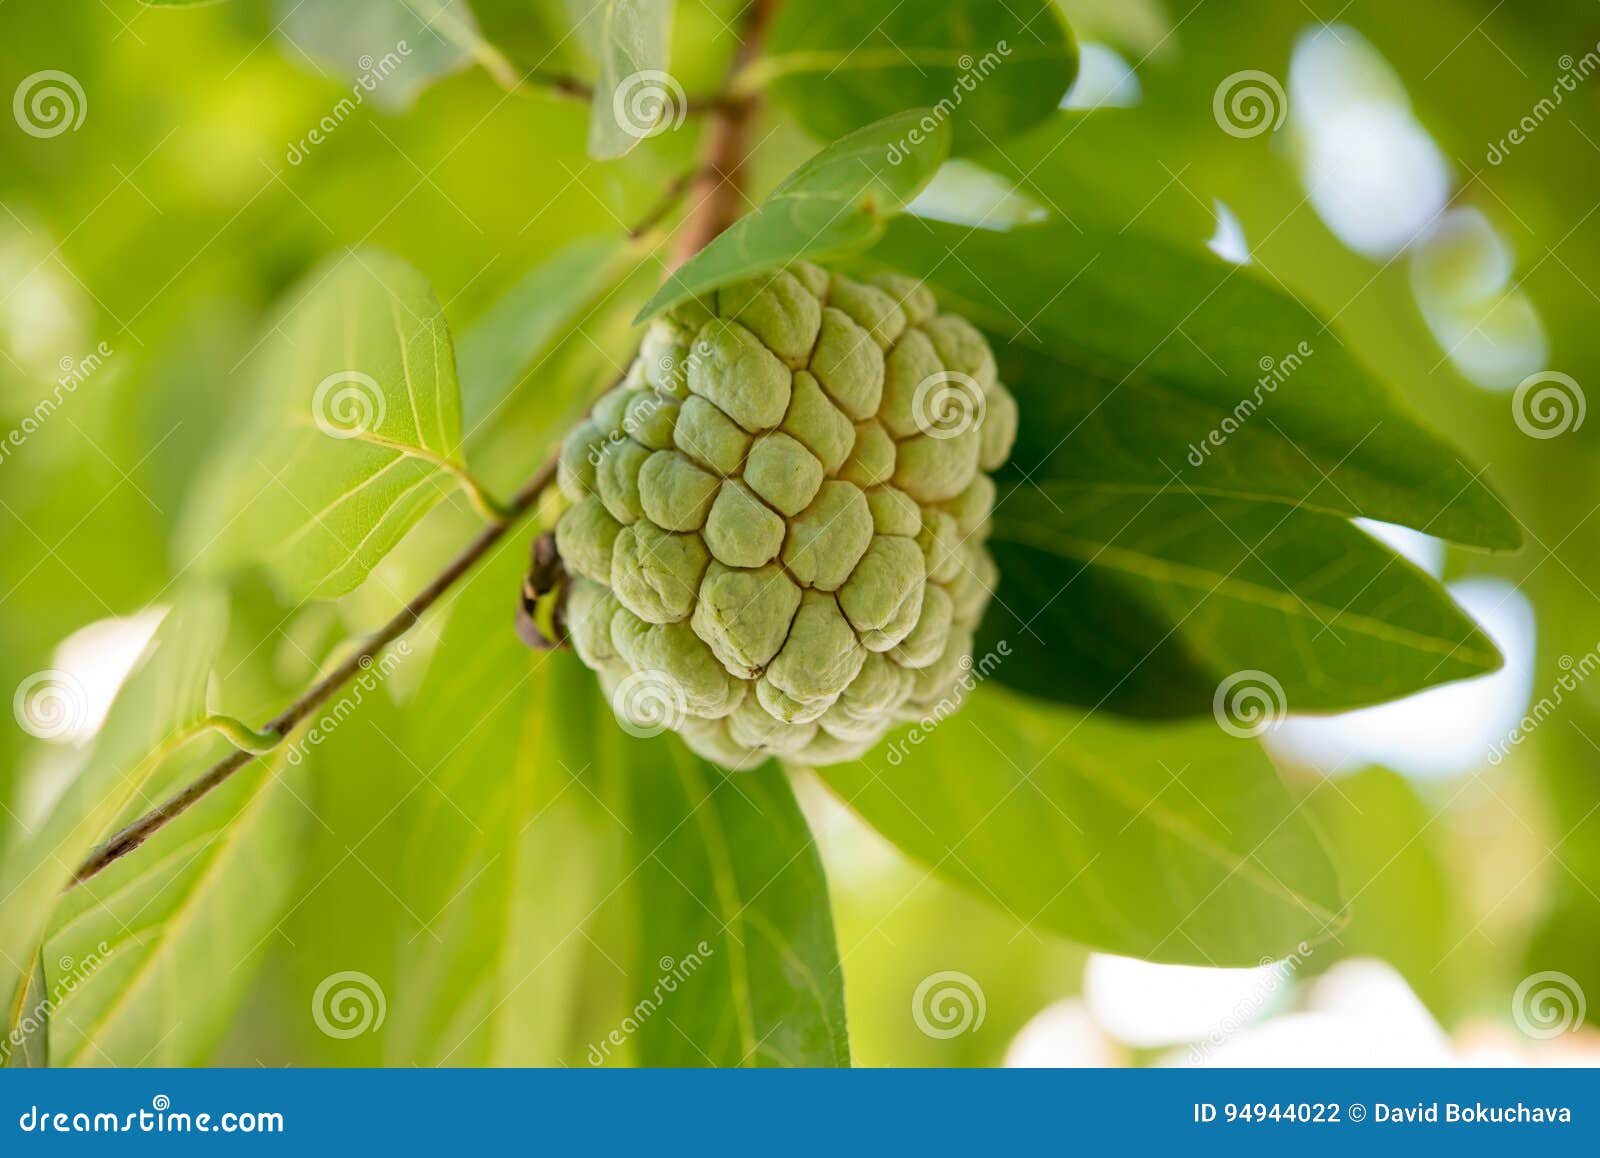 sugar-apple fruit on a branch